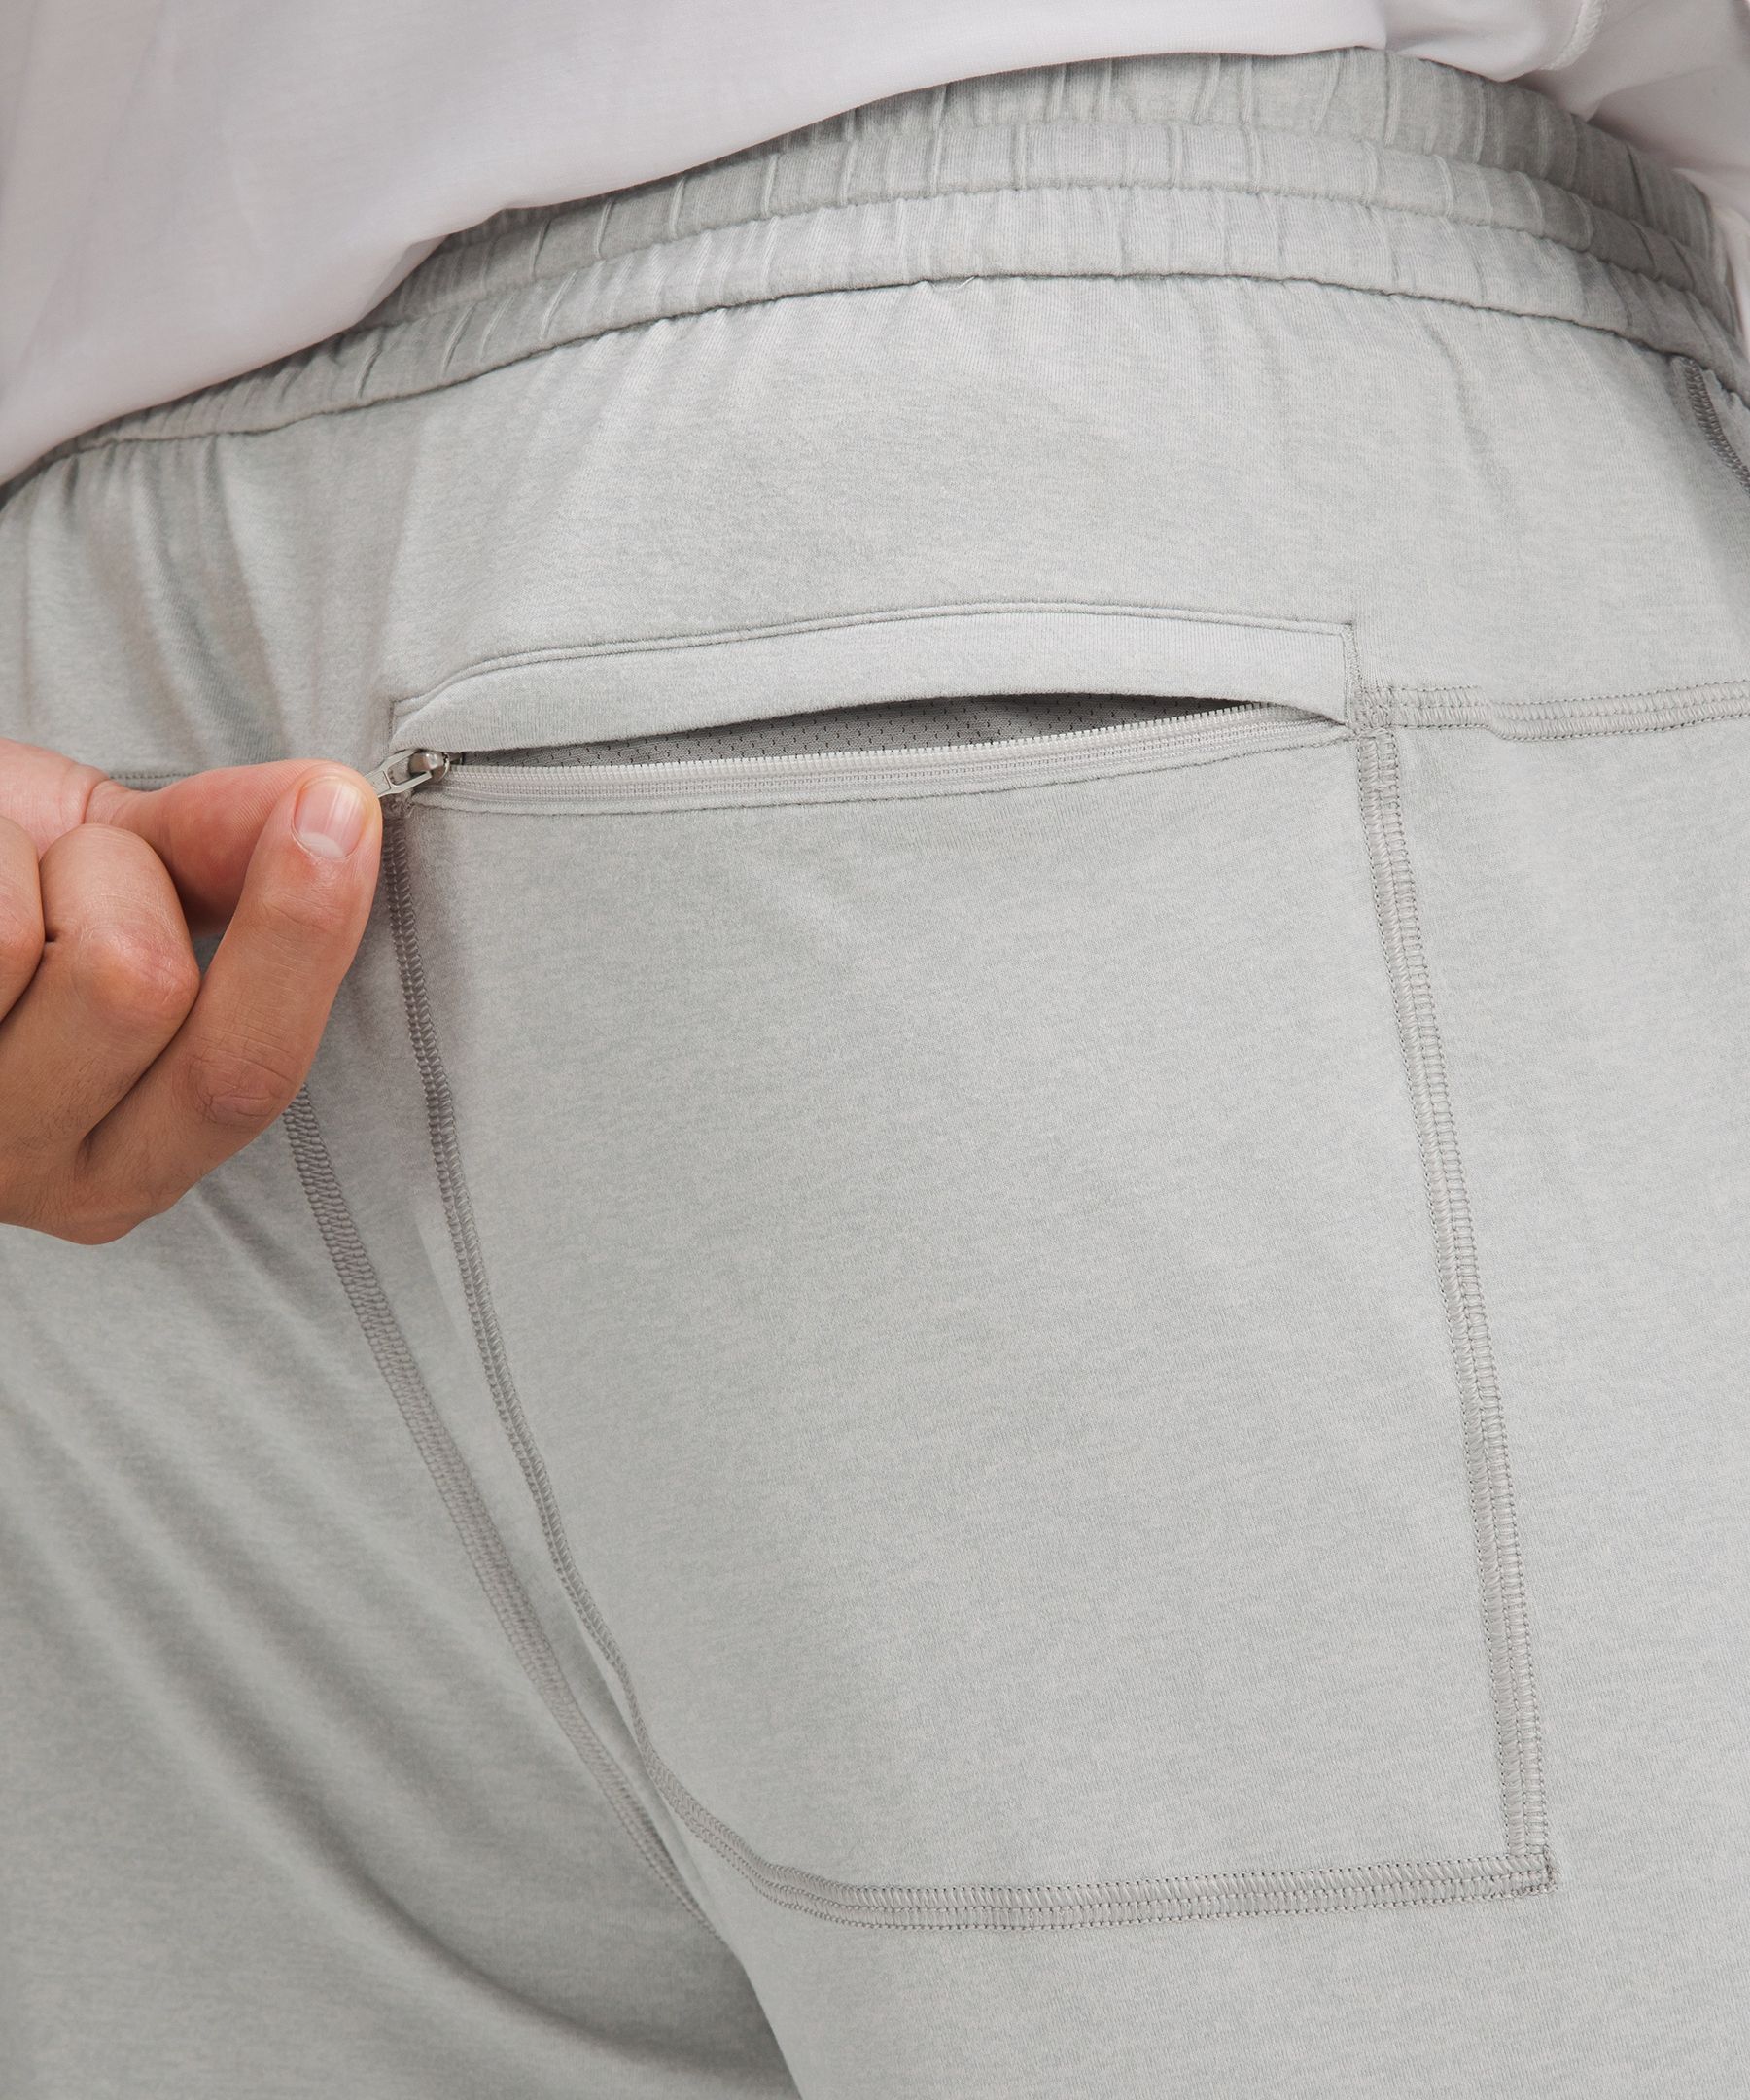 Lululemon Men's Soft Jersey Tapered Pant Black Size Large 28 Inch Inseam